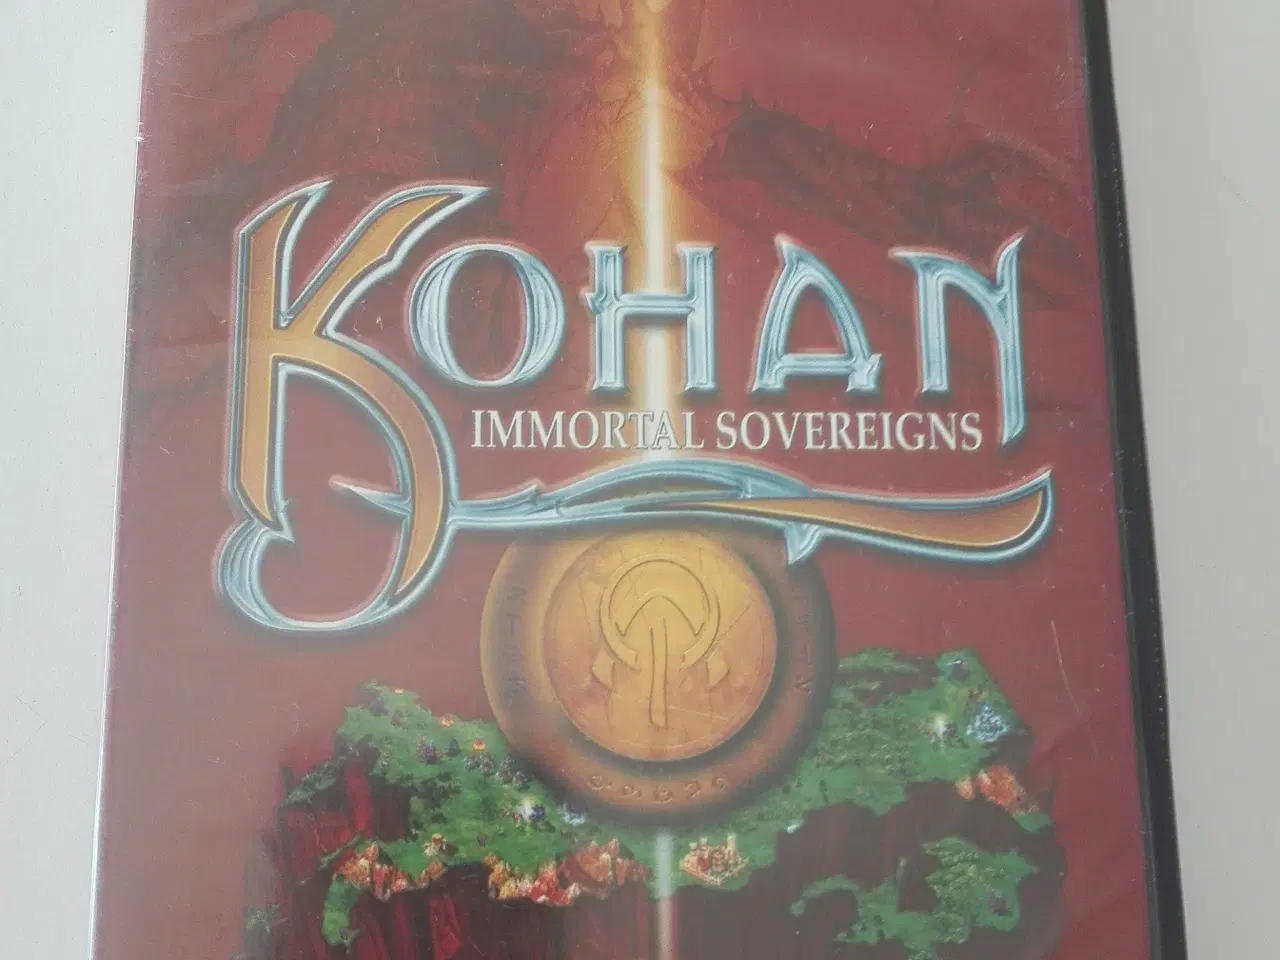 Billede 2 - Kohan Immortal Sovereigns